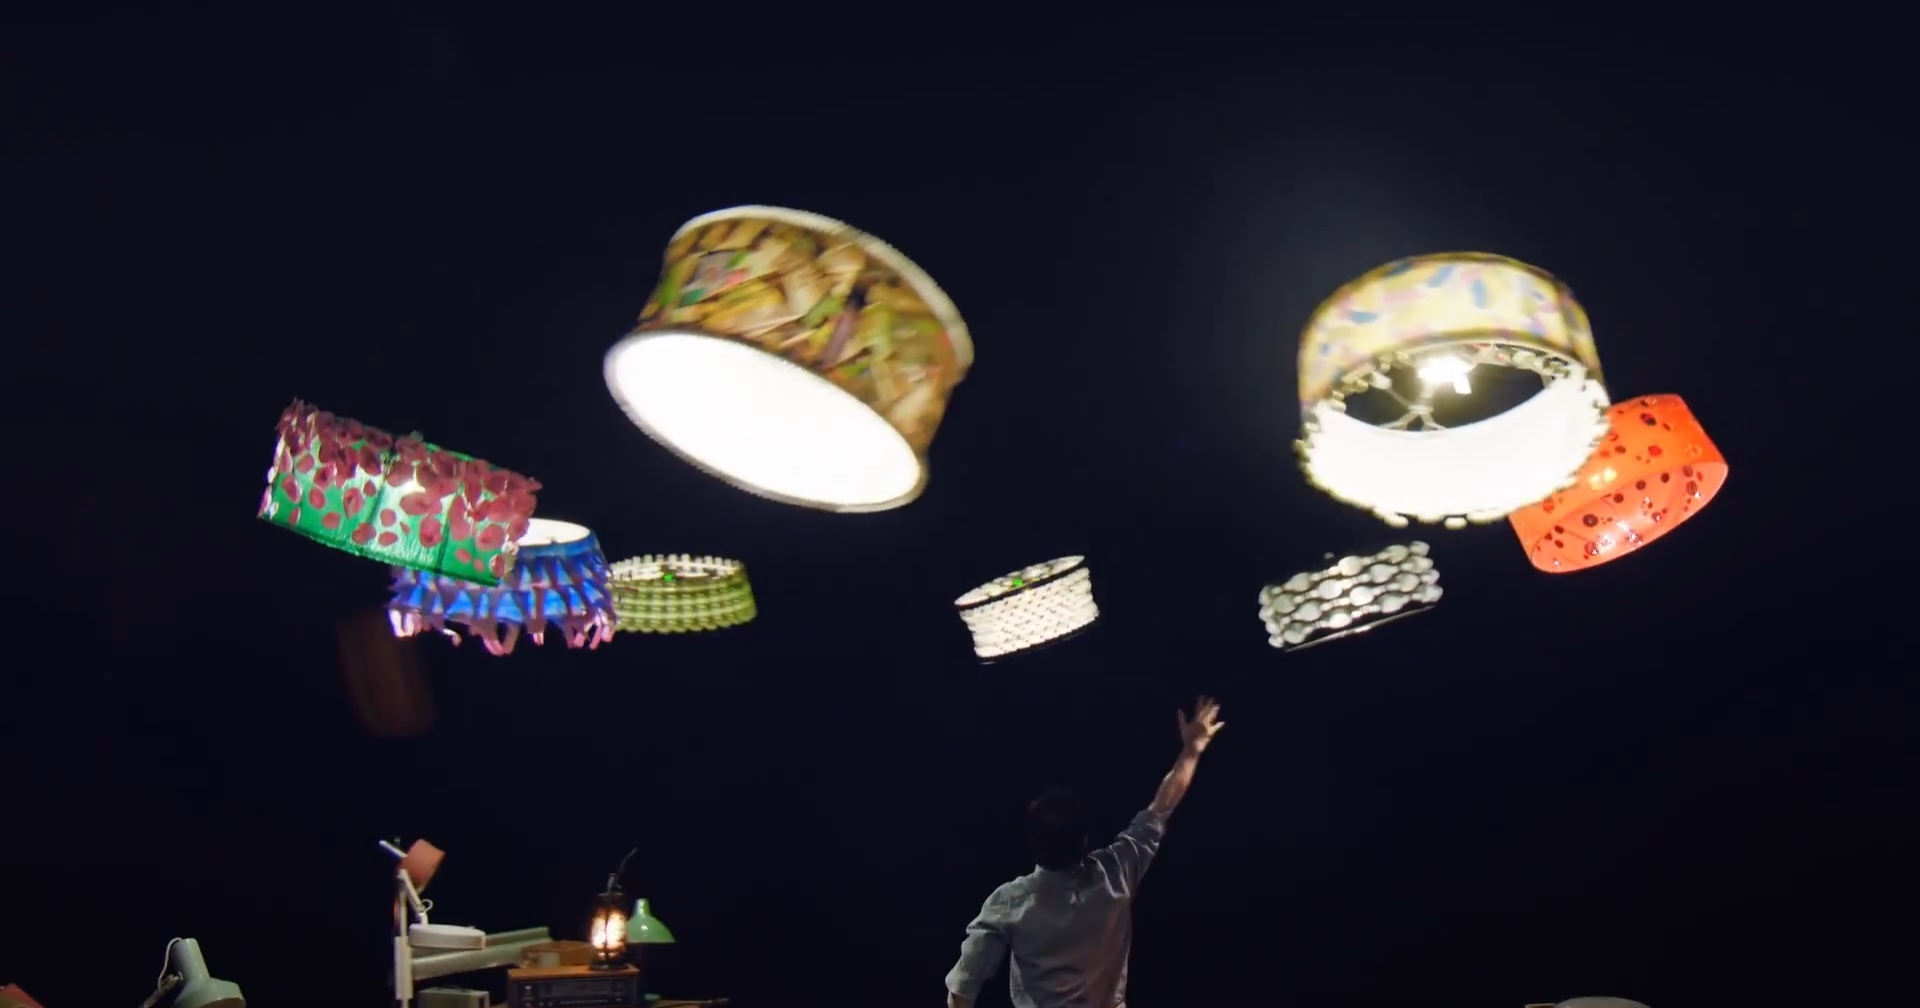 cirque du soleil drone quadcopter eth zurich sparked interaction sync lamps